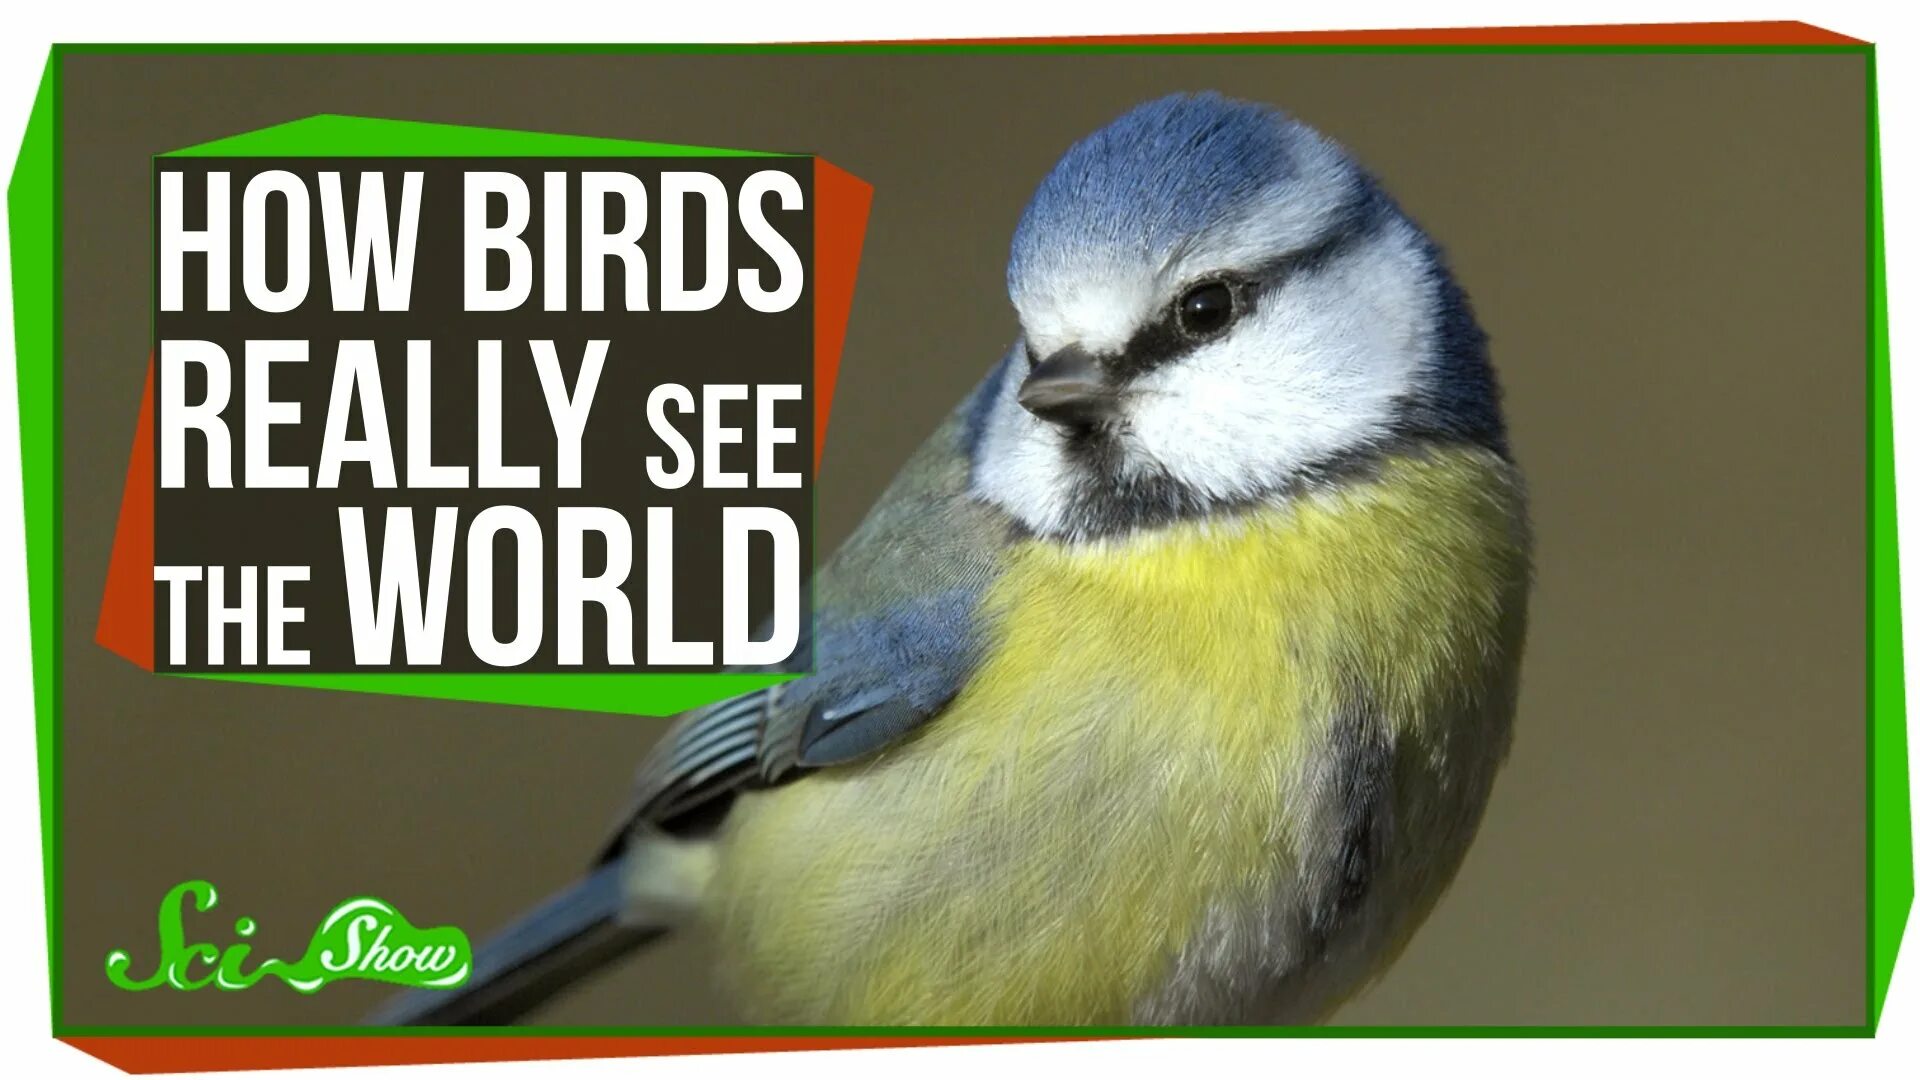 Birds World. How Birds see. Birds are real. How Birds Breathe.